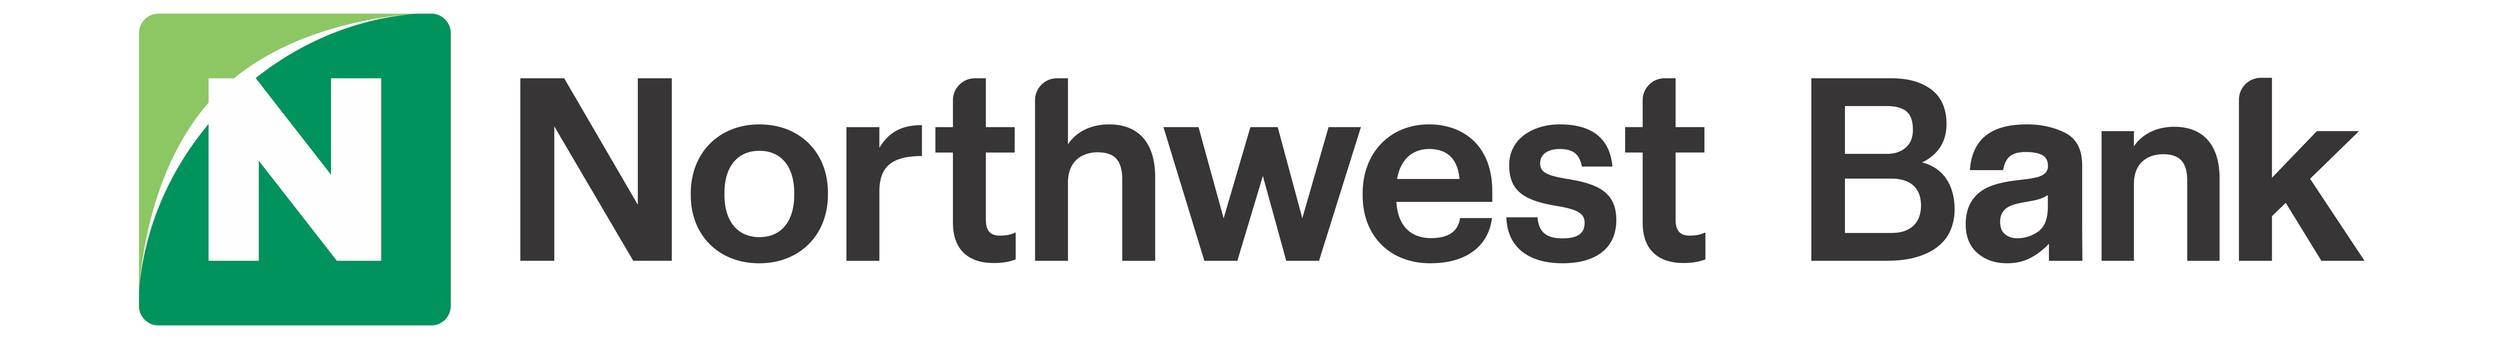 northwest-bank-logo.png